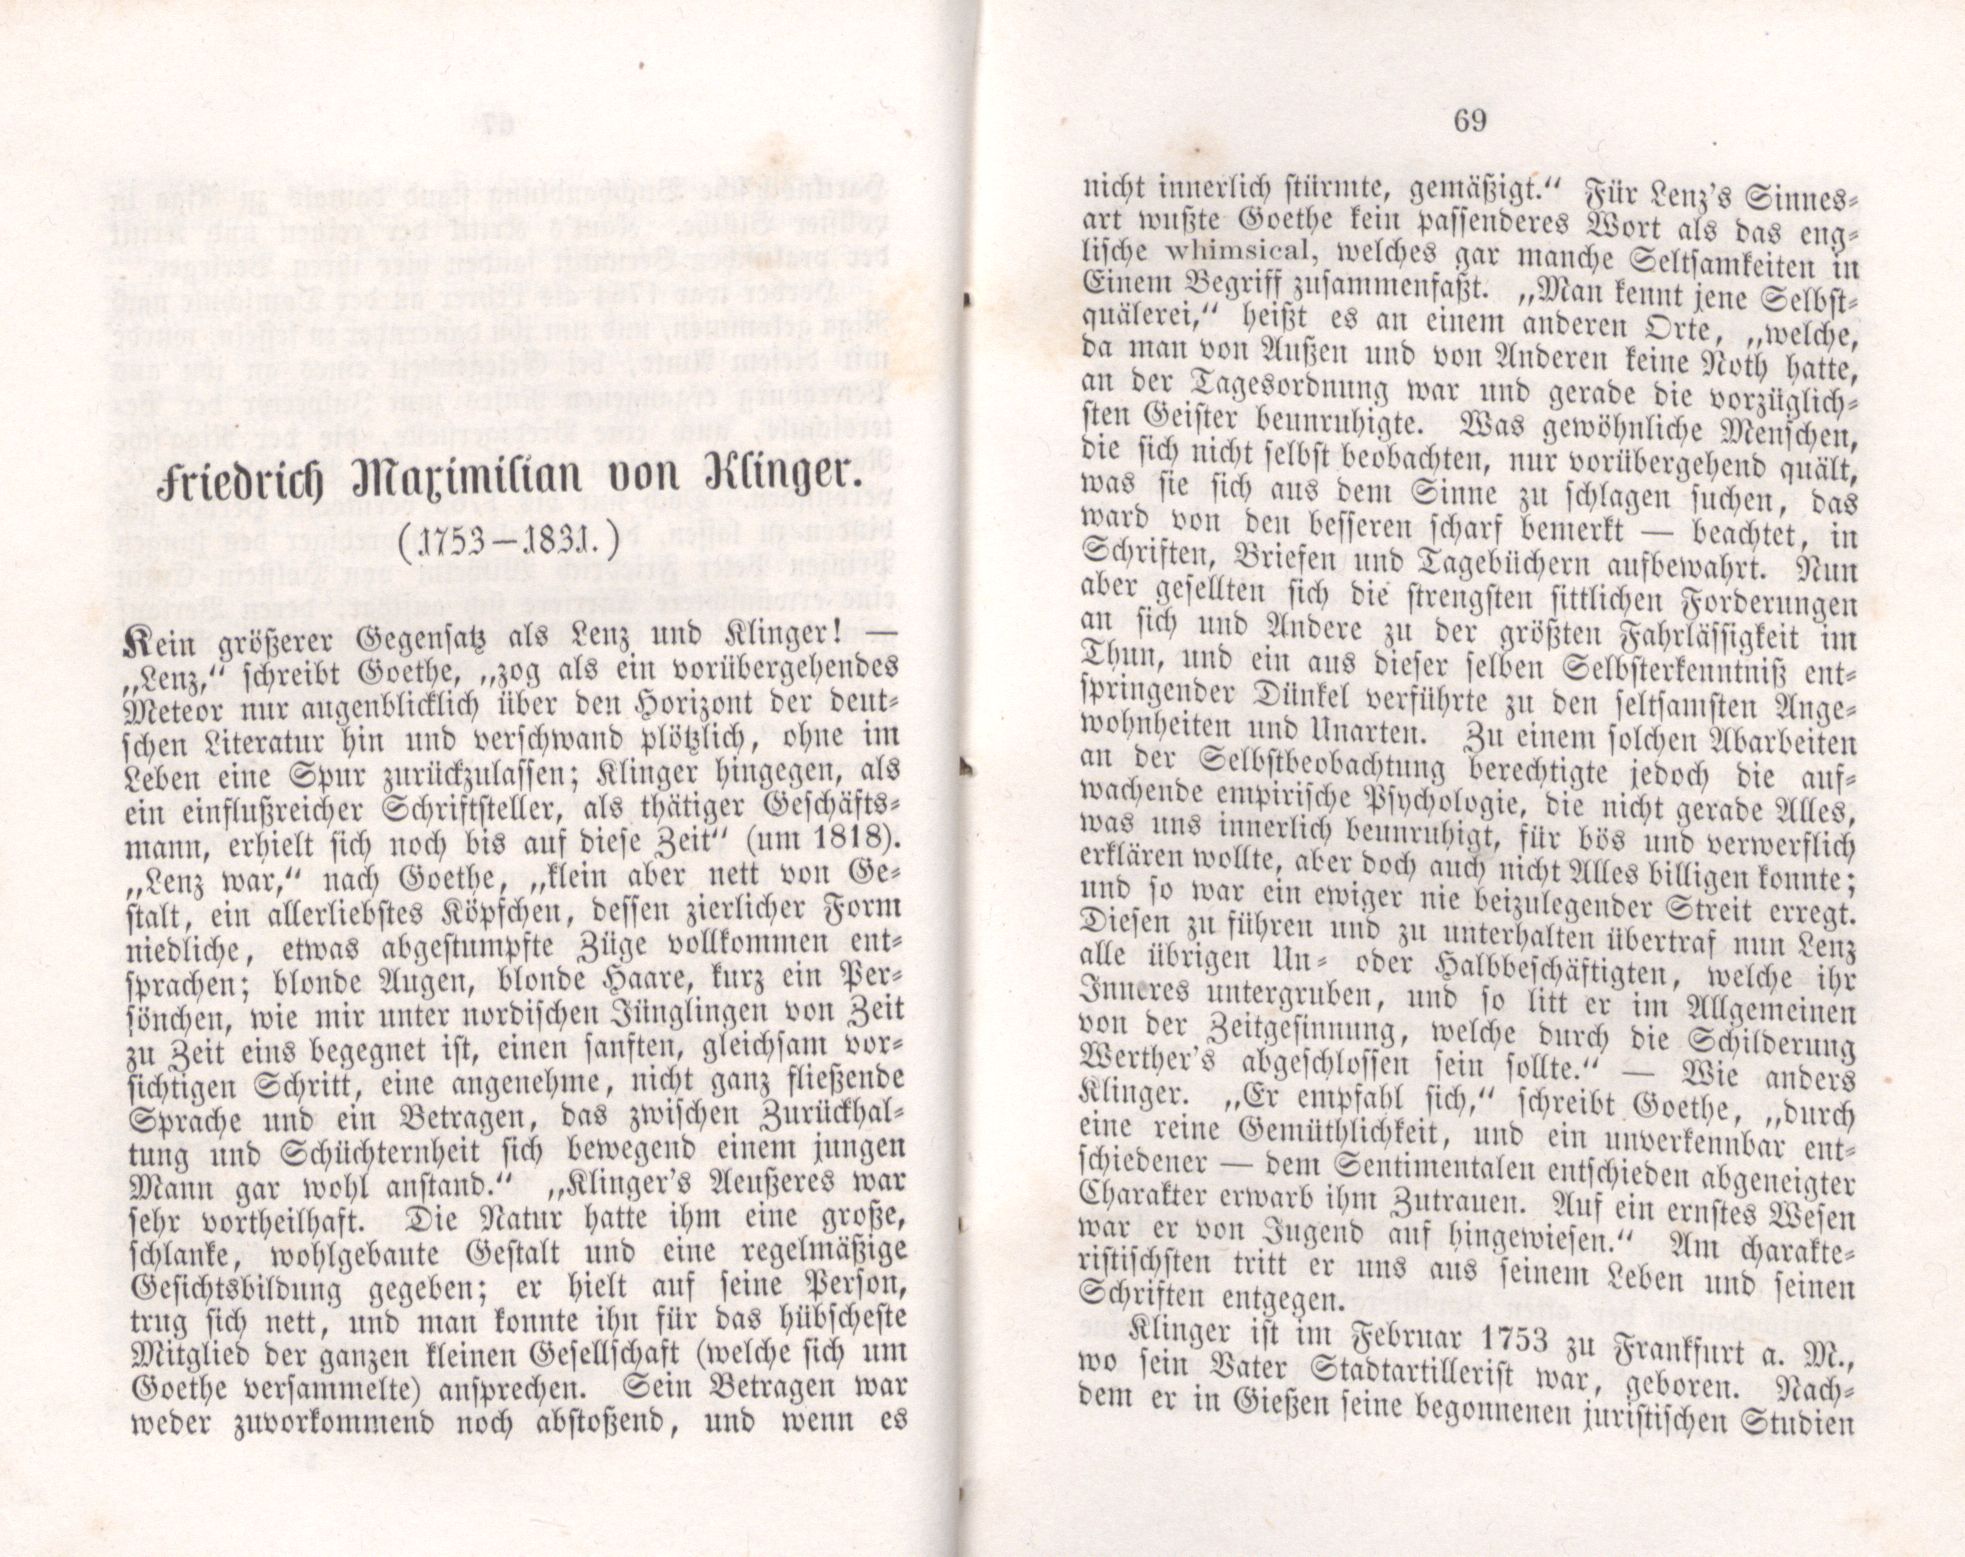 Friedrich Maximilian von Klinger (1855) | 1. (68-69) Main body of text